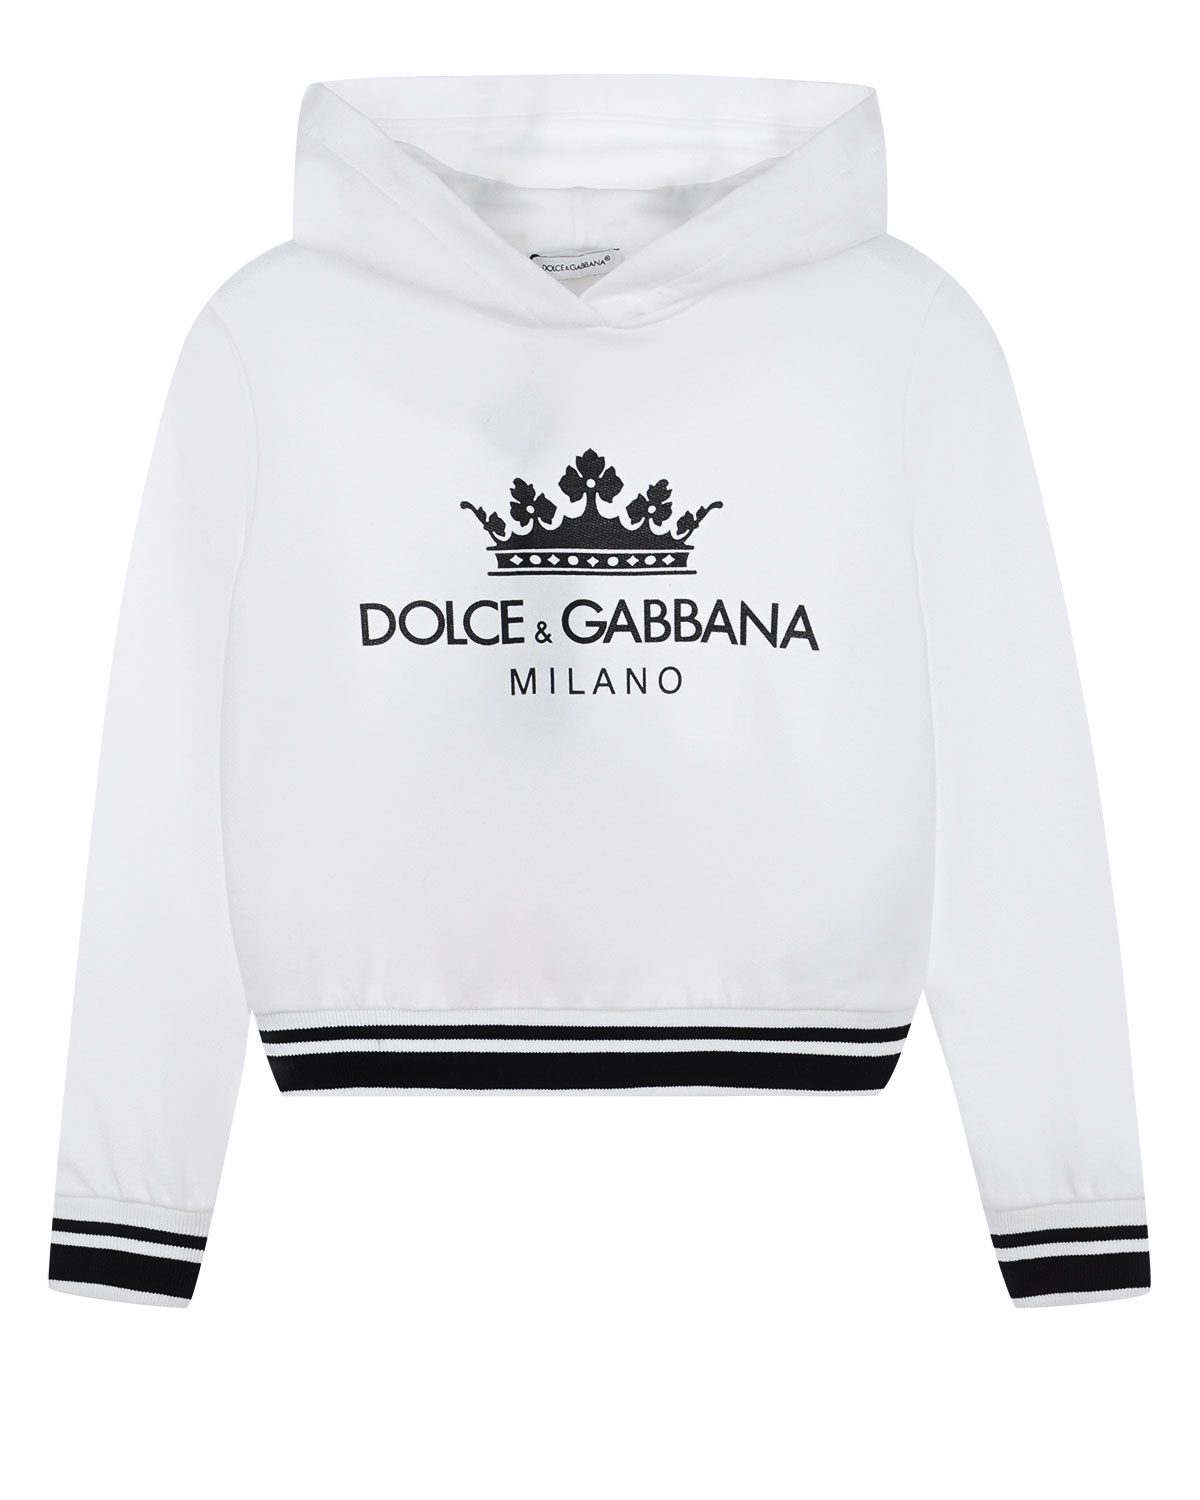 Кофта дольче габбана. Толстовка Dolce Gabbana Jazz. Худи Dolce Gabbana 10. Балахон Dolce Gabbana. Dolce Gabbana кофта Milano.